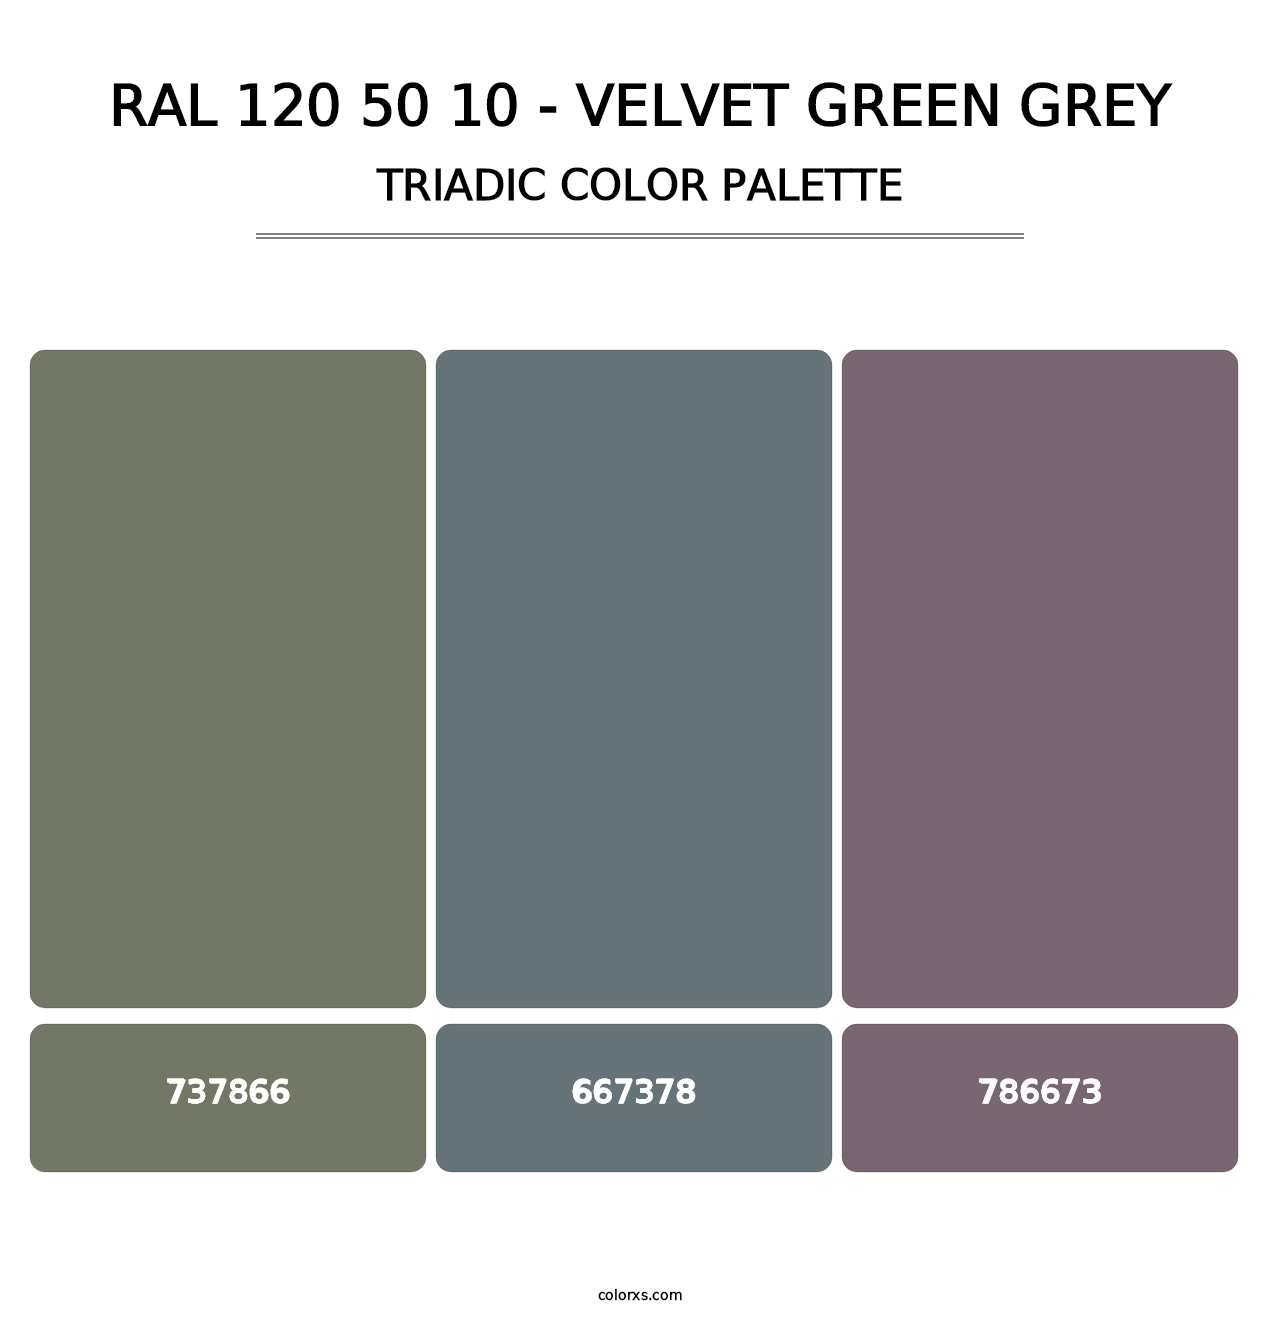 RAL 120 50 10 - Velvet Green Grey - Triadic Color Palette